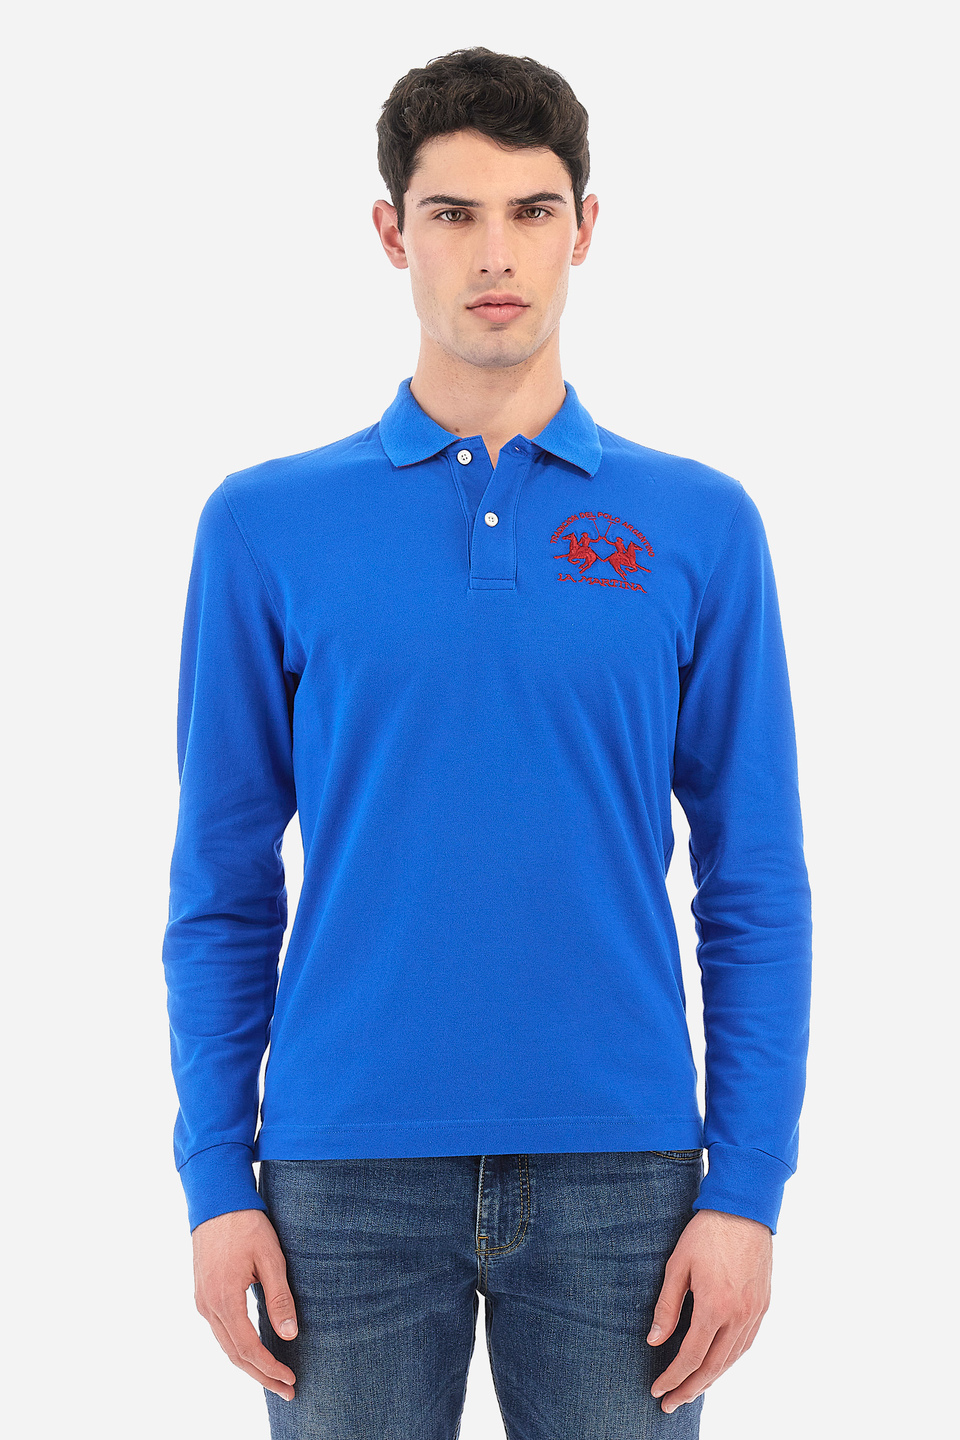 Men's polo shirt in a regular fit - Milo | La Martina - Official Online Shop